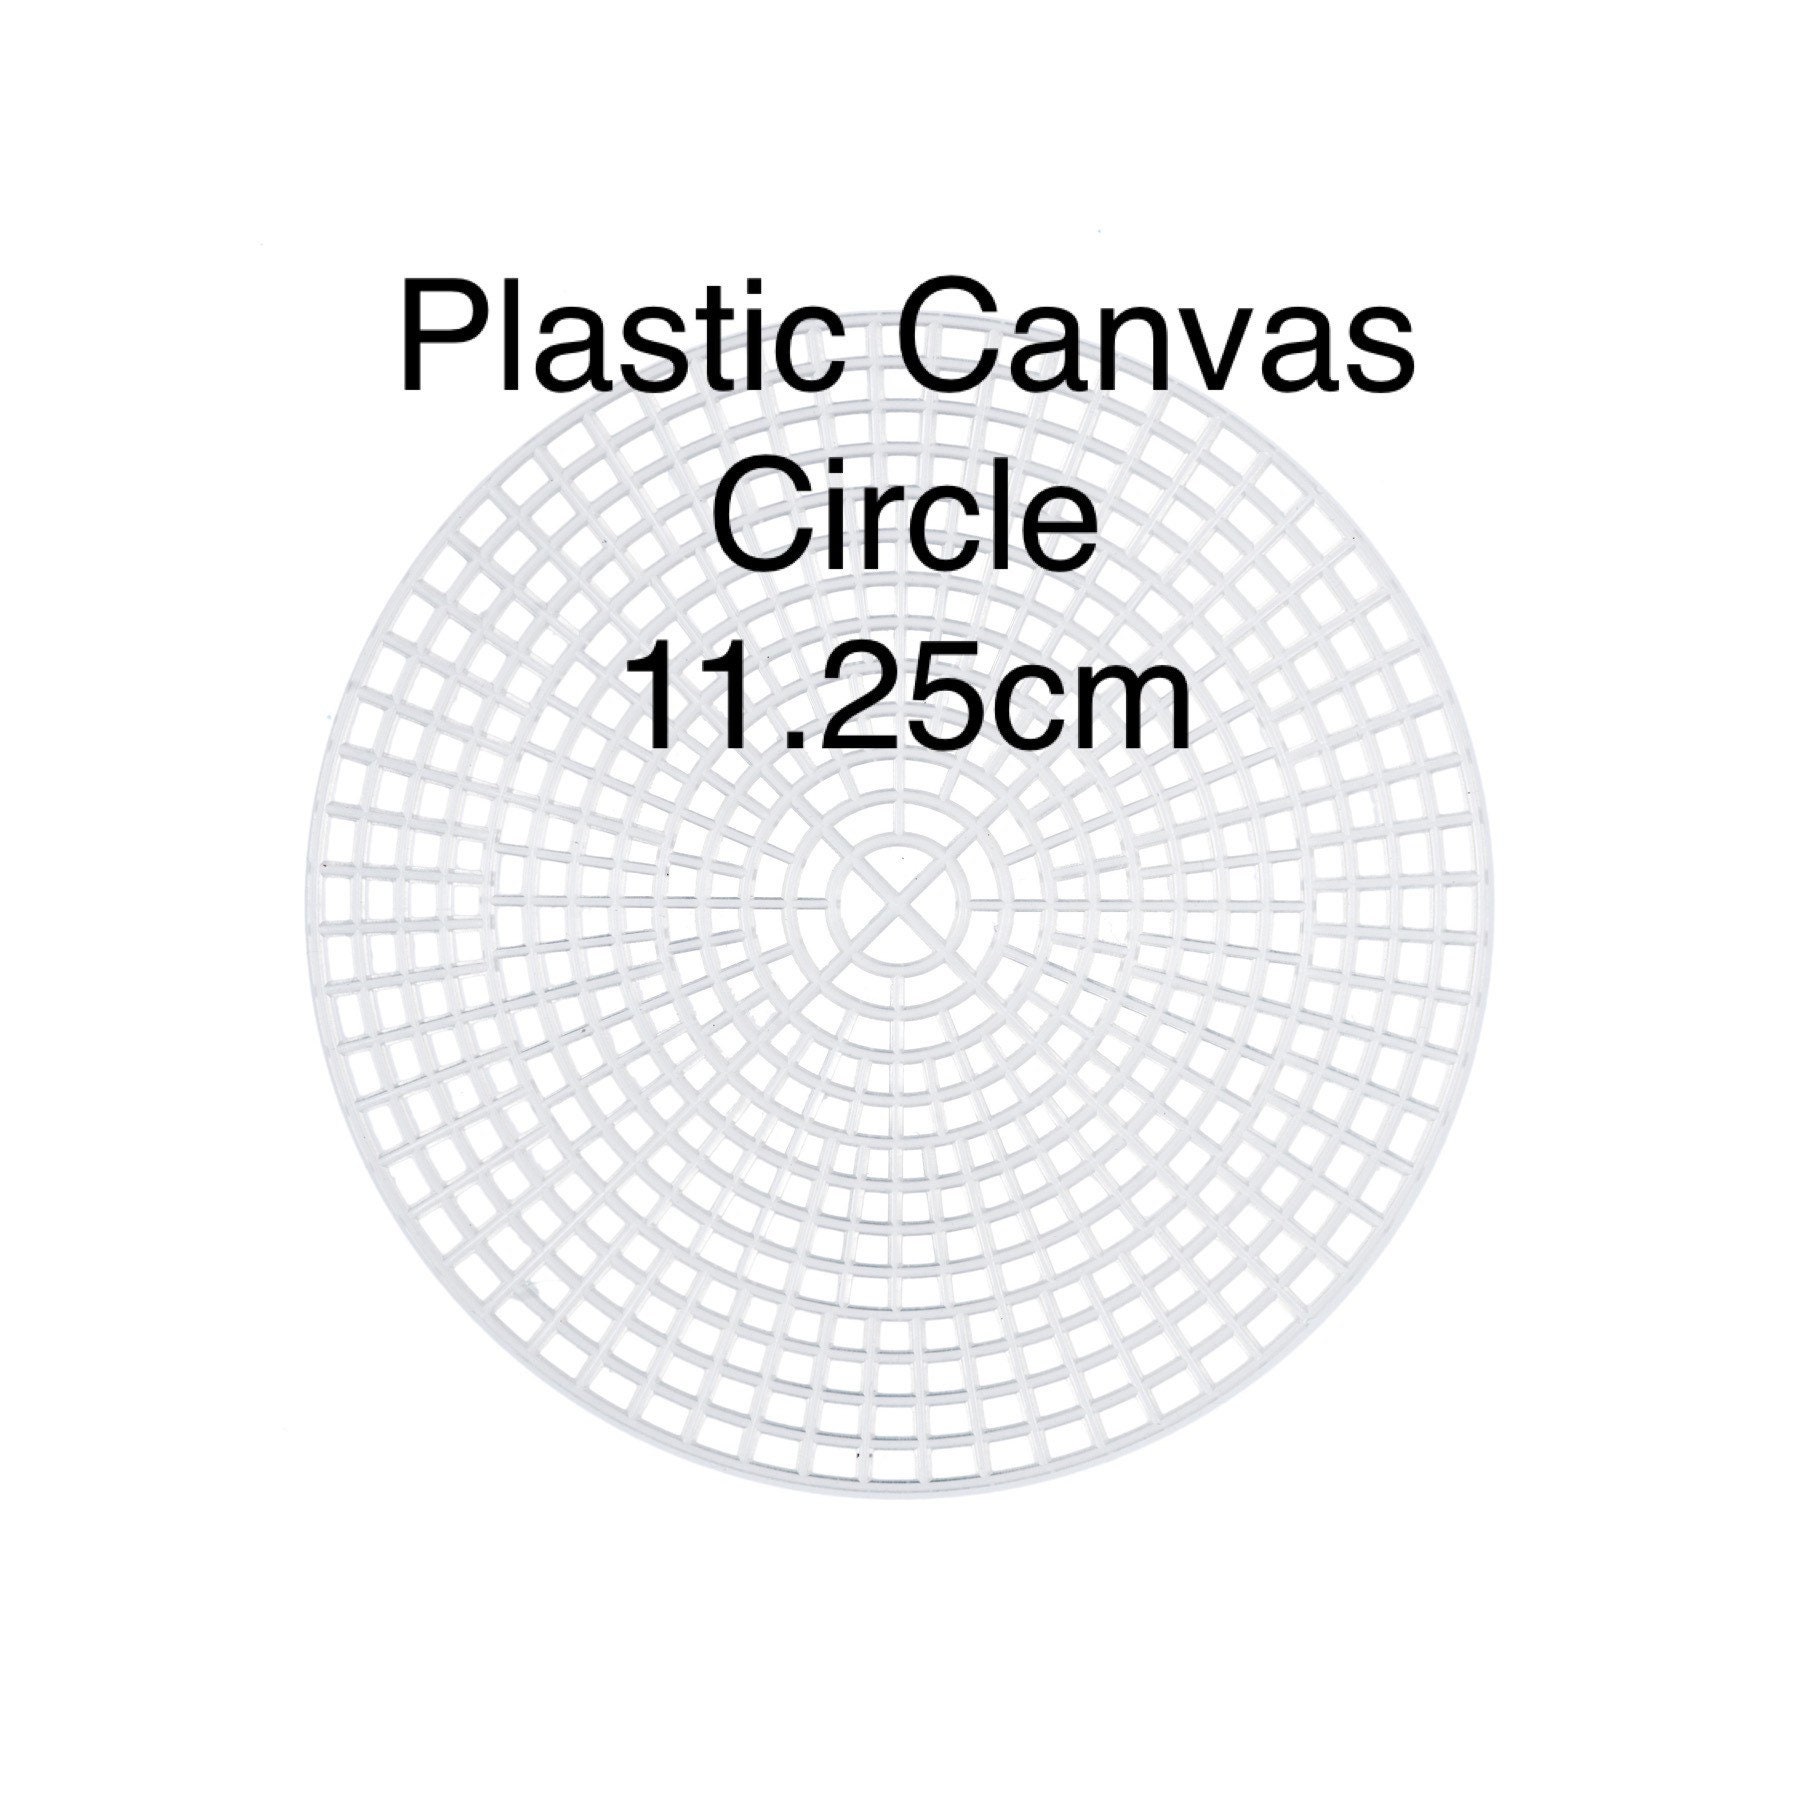 Plastic Canvas Circle